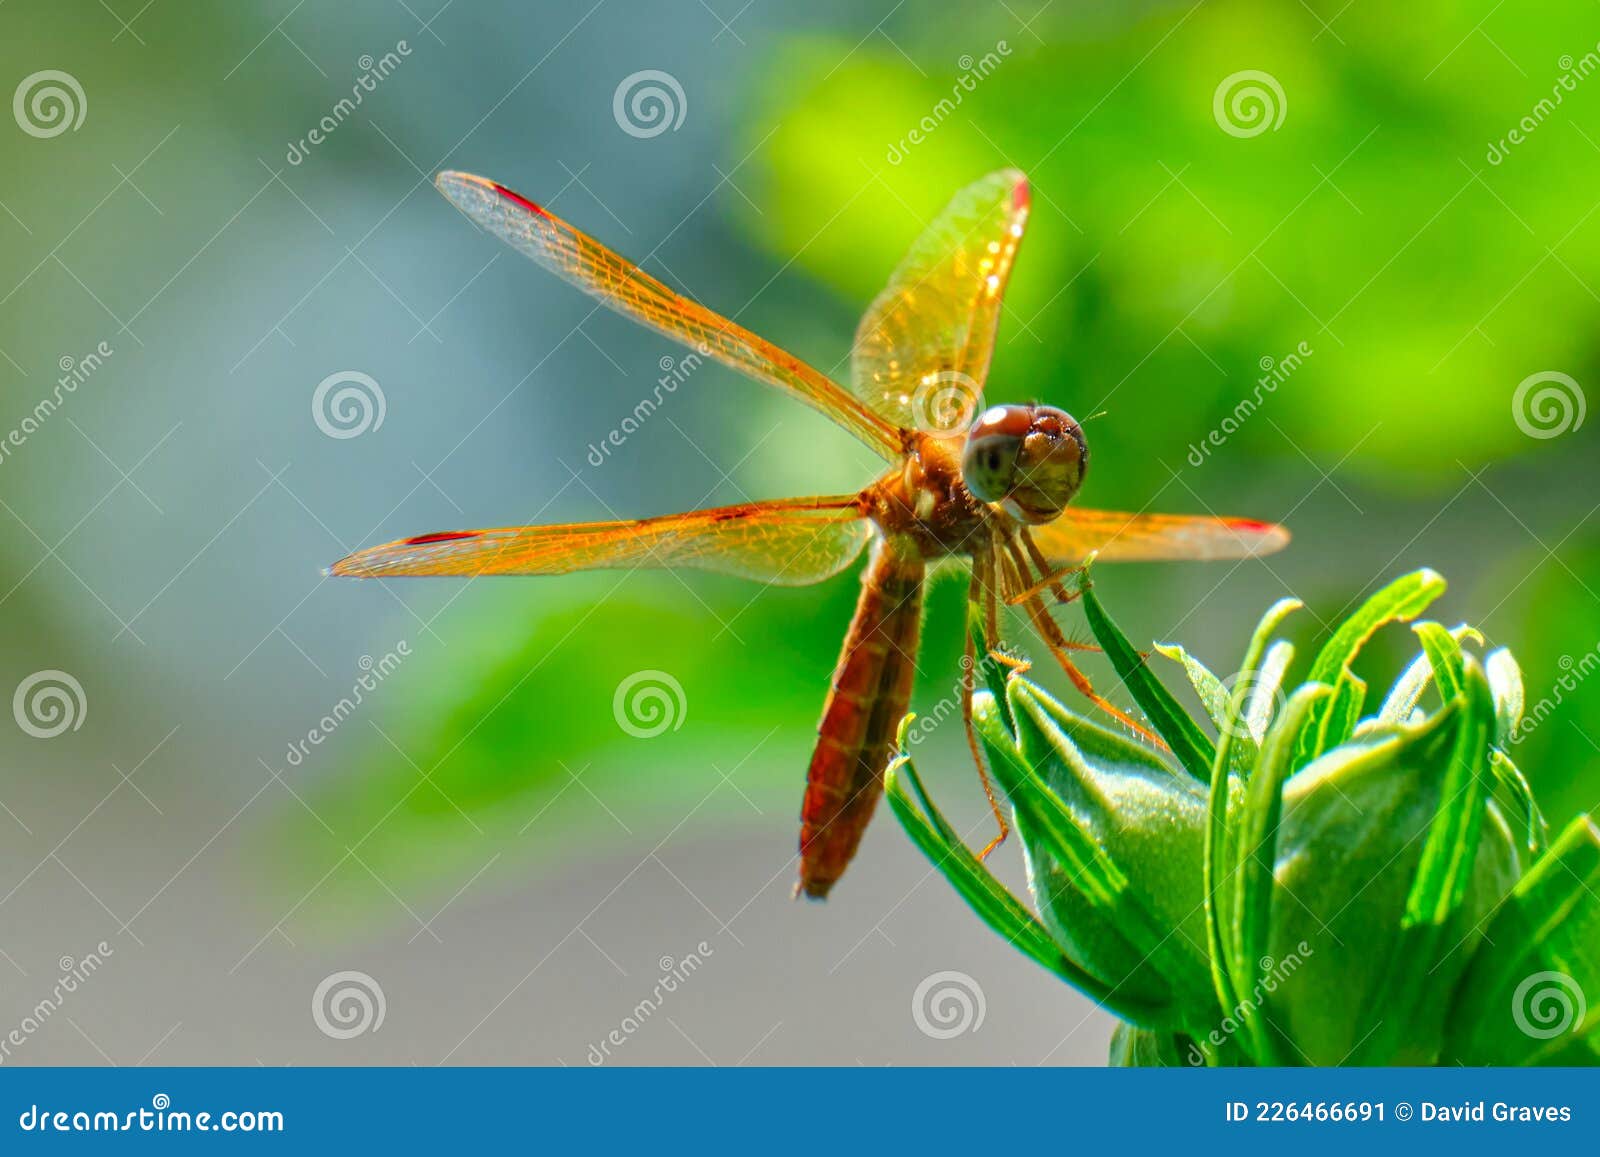 eastern amberwing dragonfly (perithemis tenera)